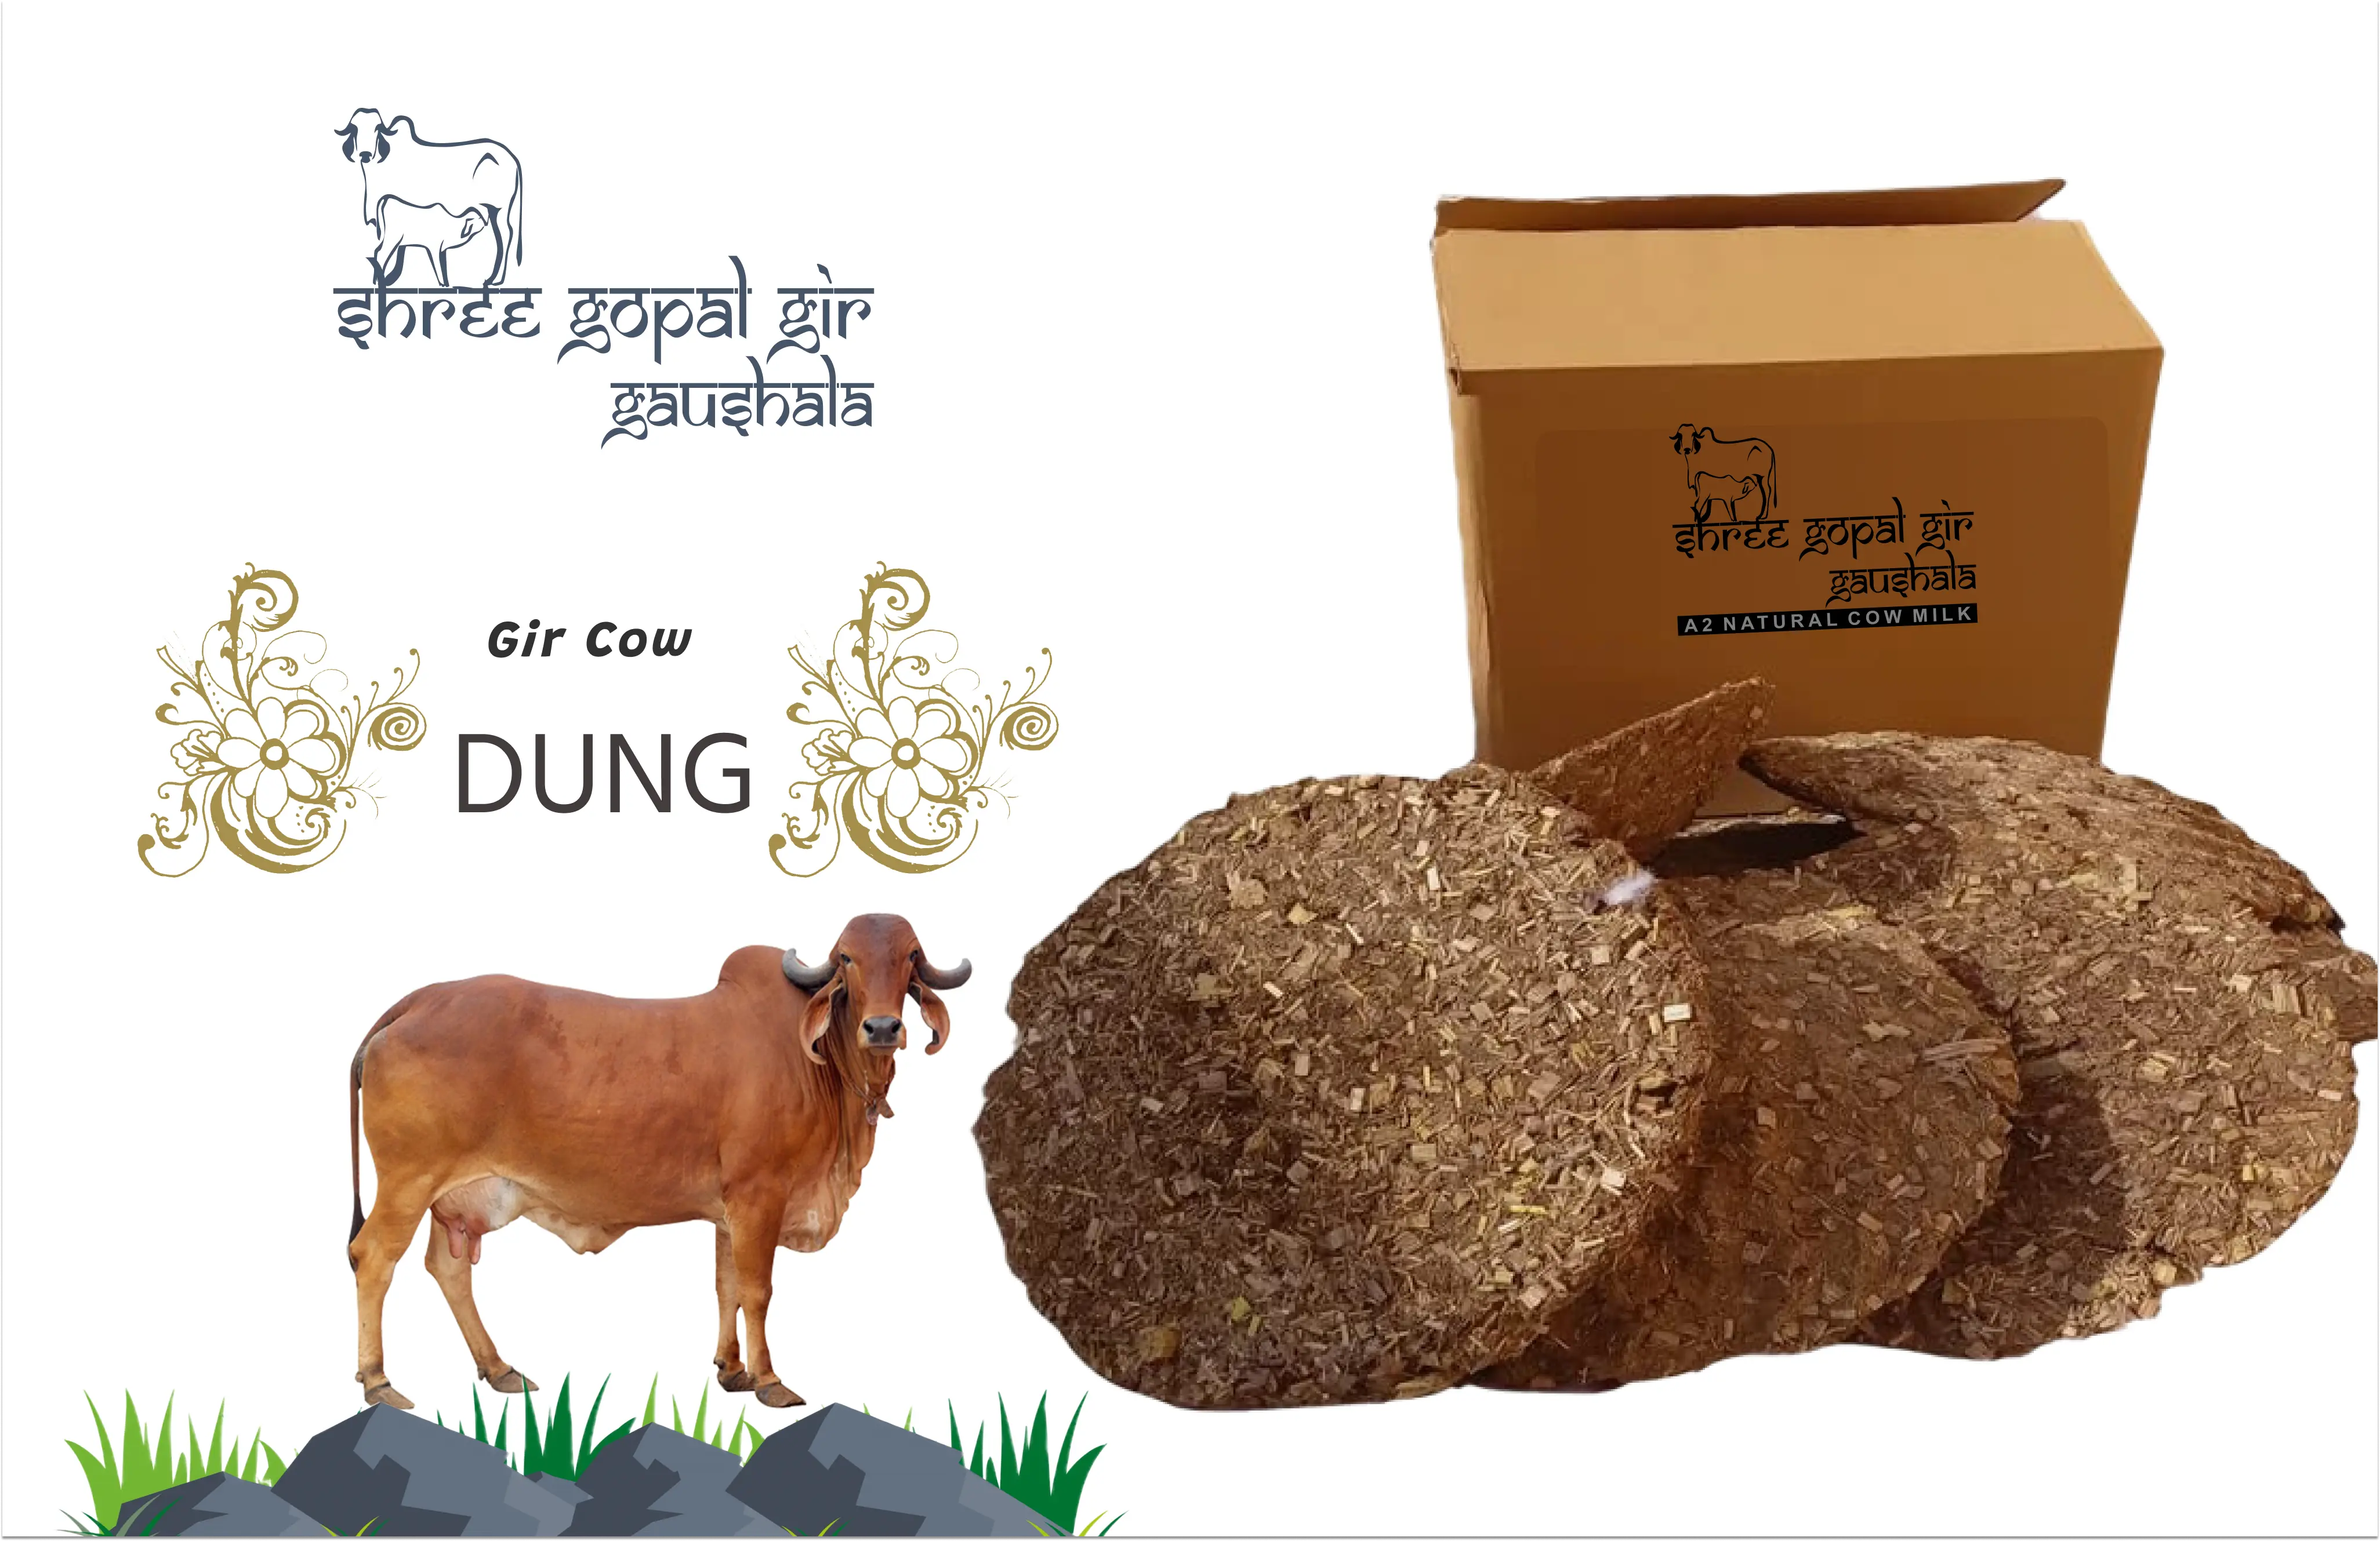 Gir Cow Dung - Shree gopal Gir Gaushala